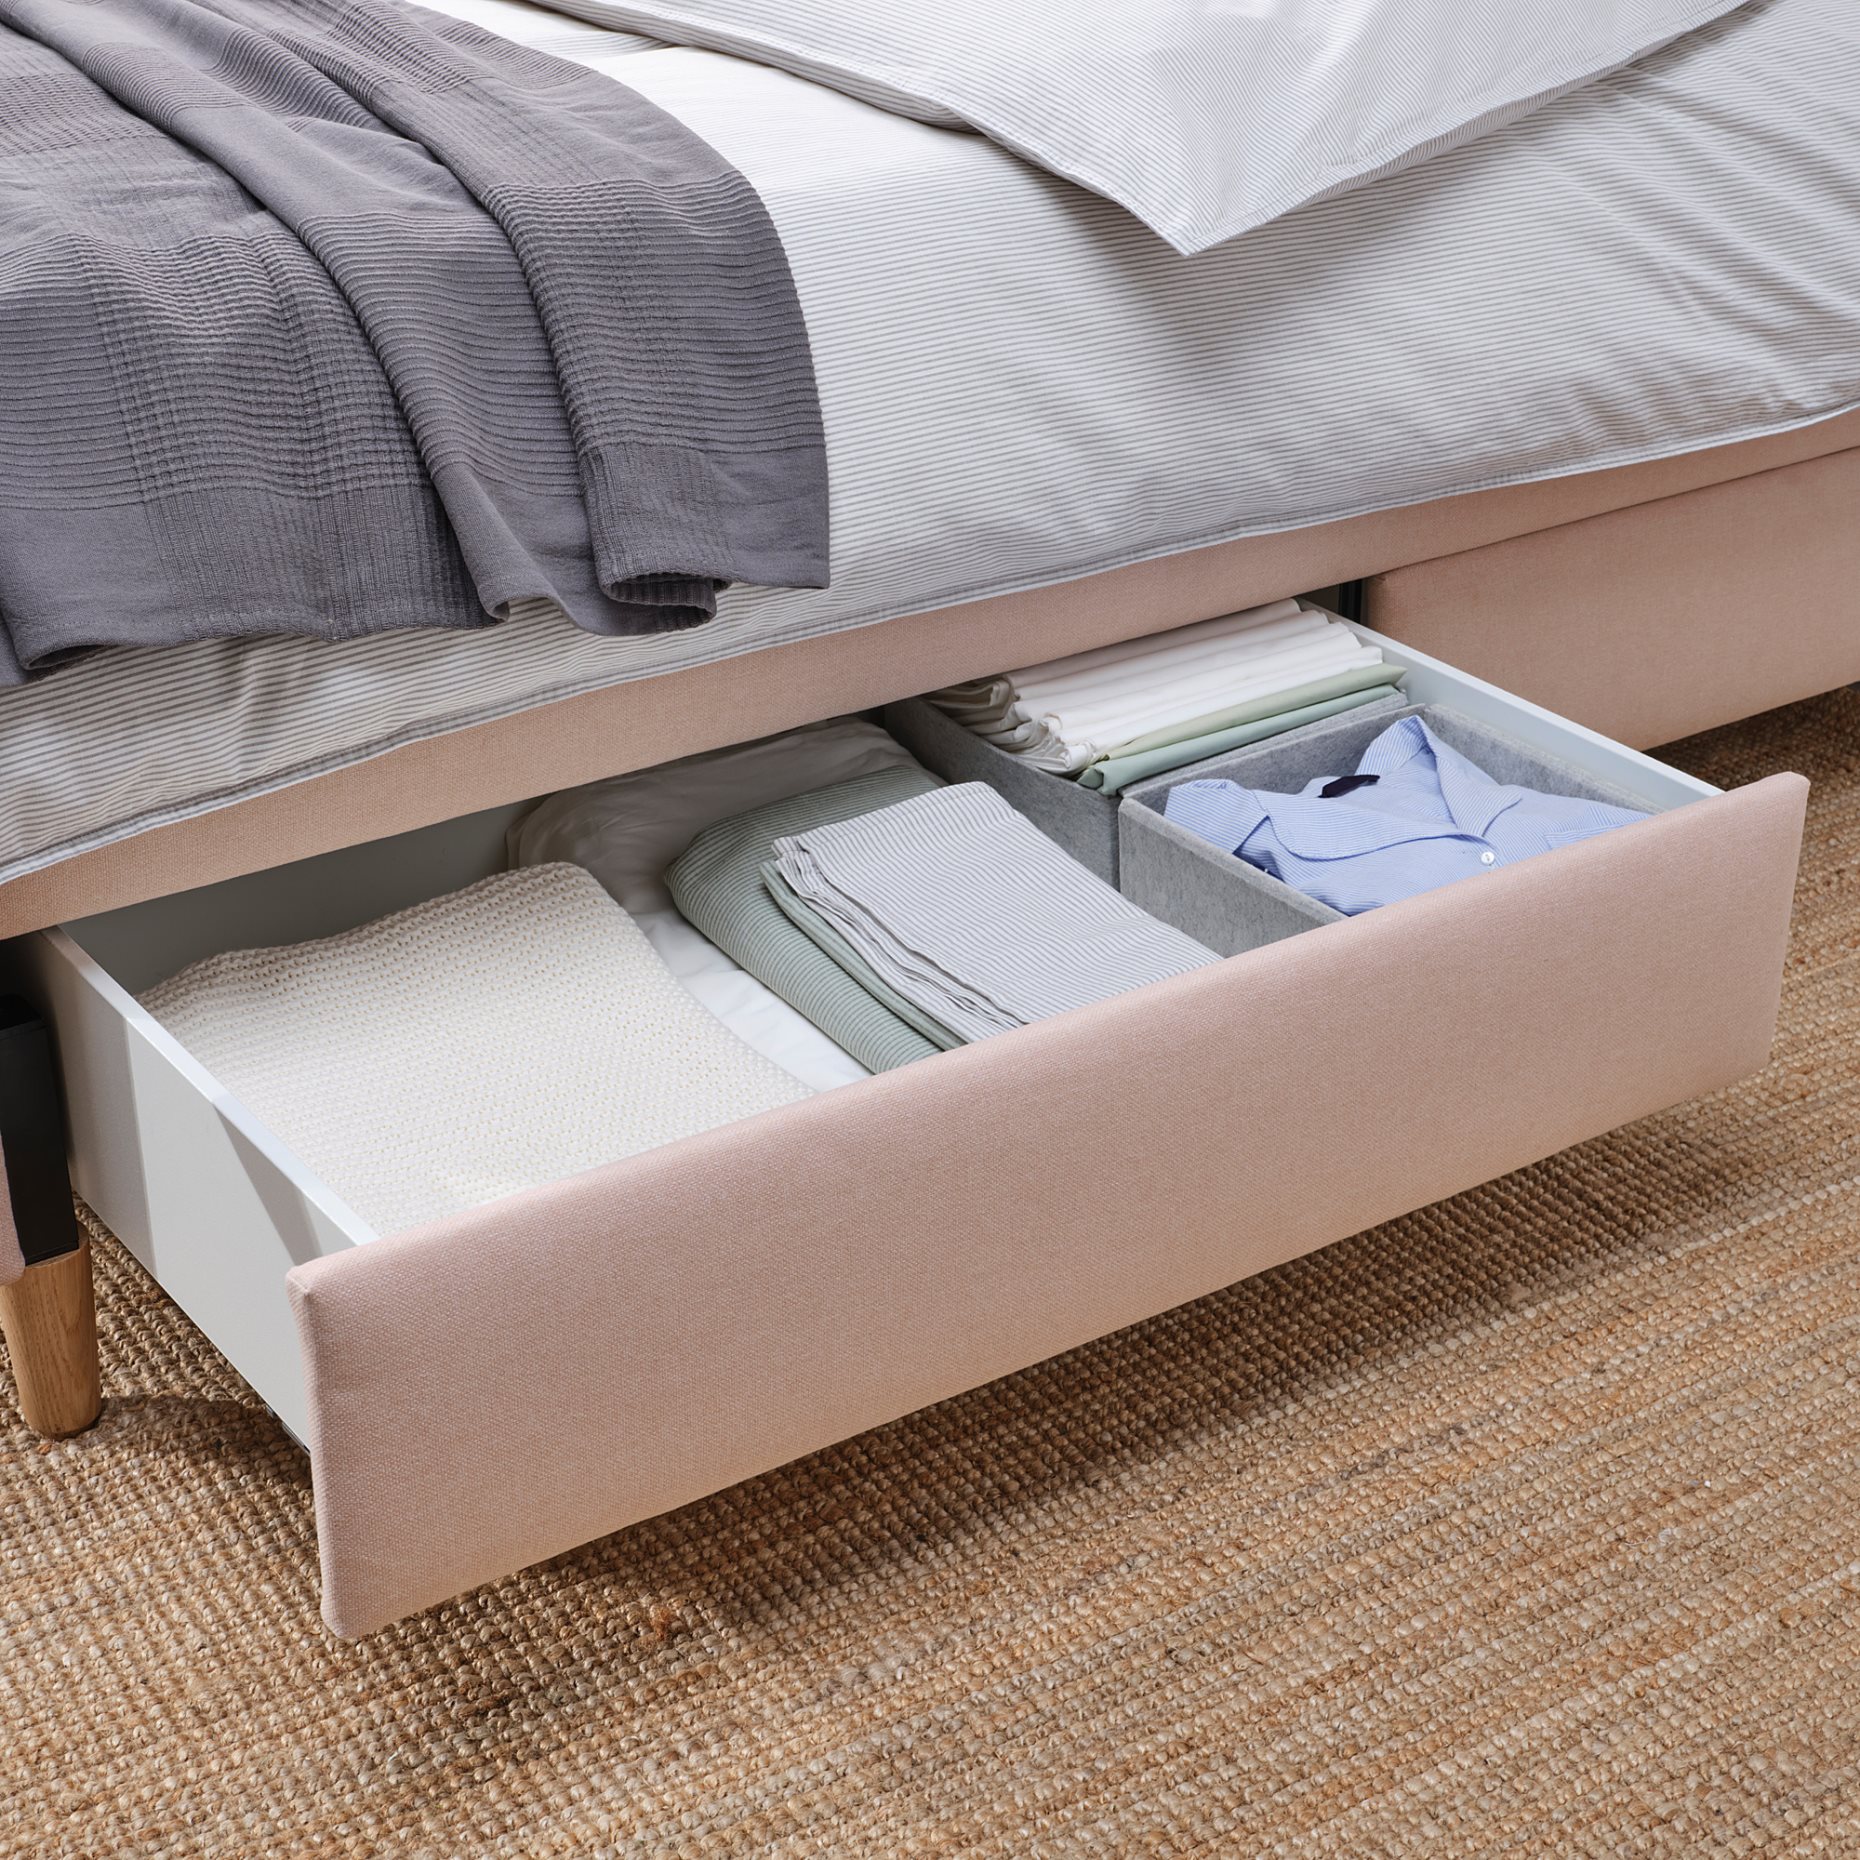 IDANÄS, upholstered storage bed, 180x200 cm, 304.471.79